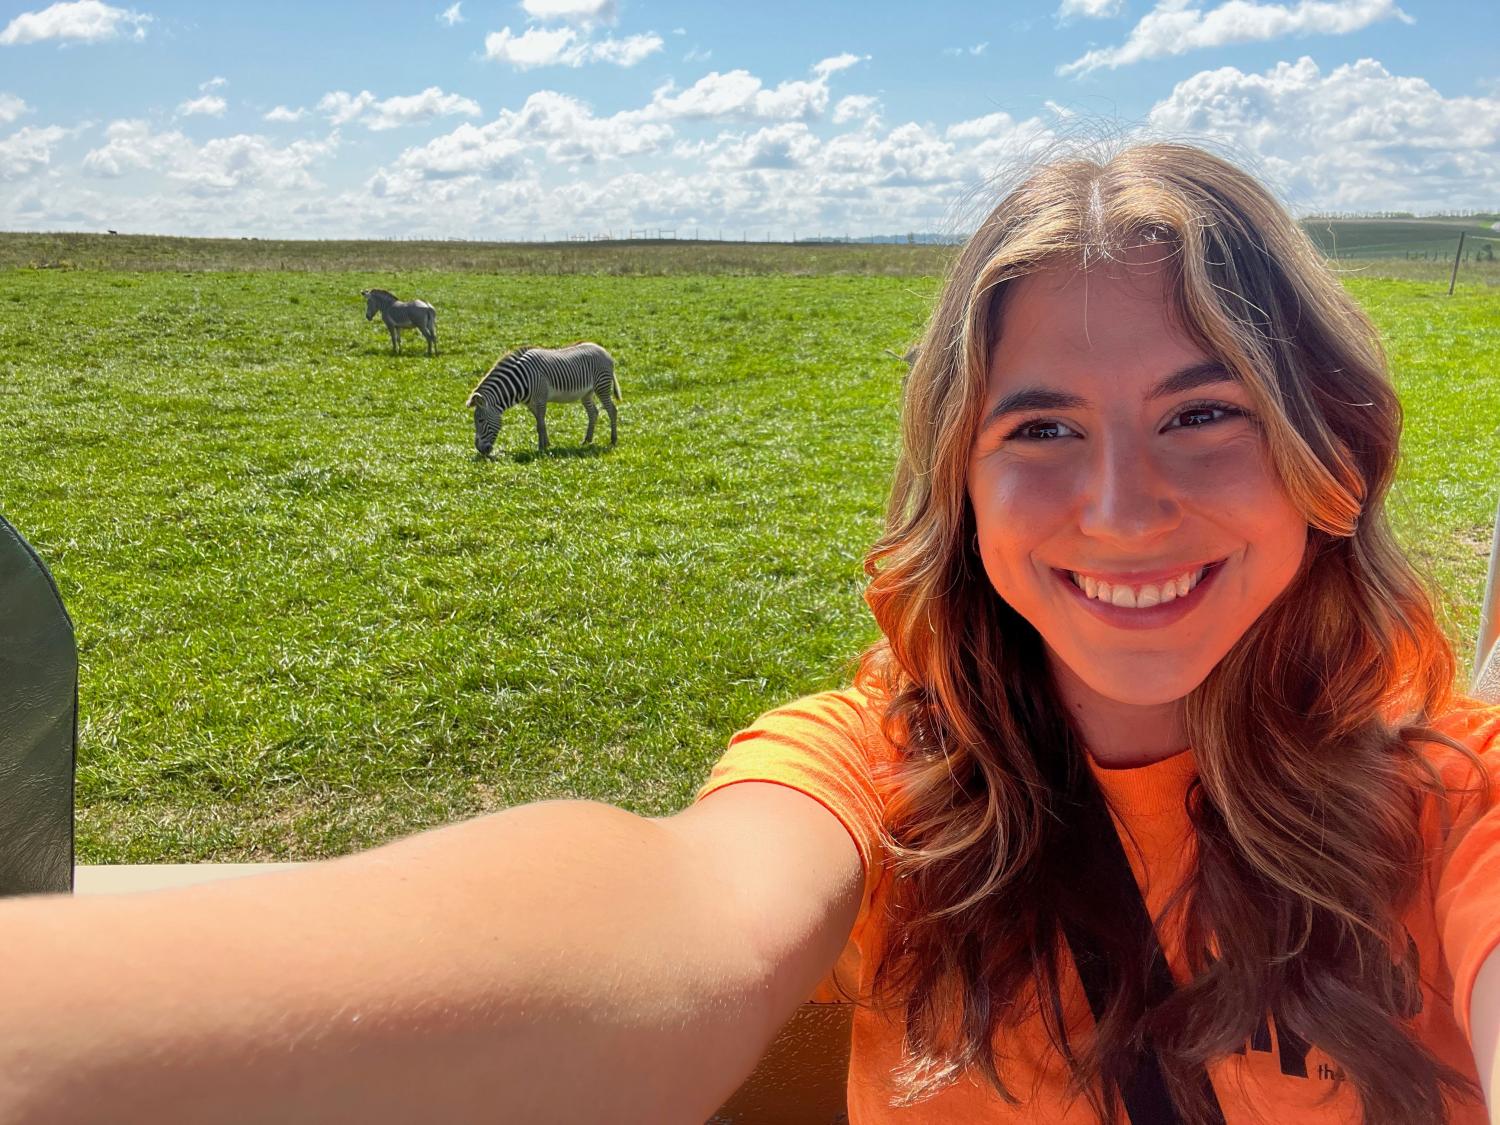 girl in orange shirt with zebras in background